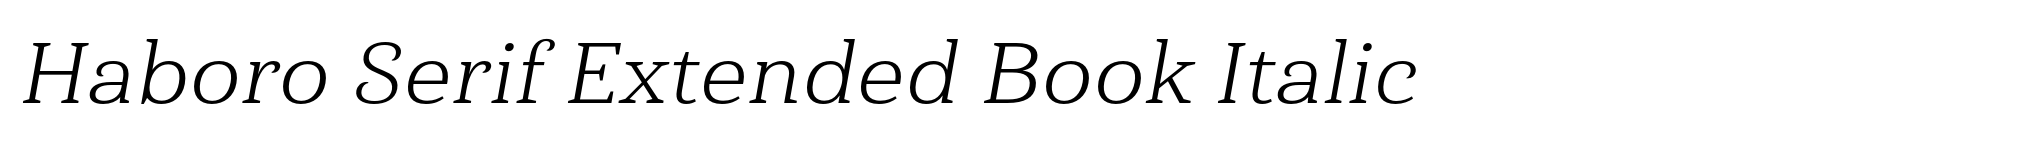 Haboro Serif Extended Book Italic image